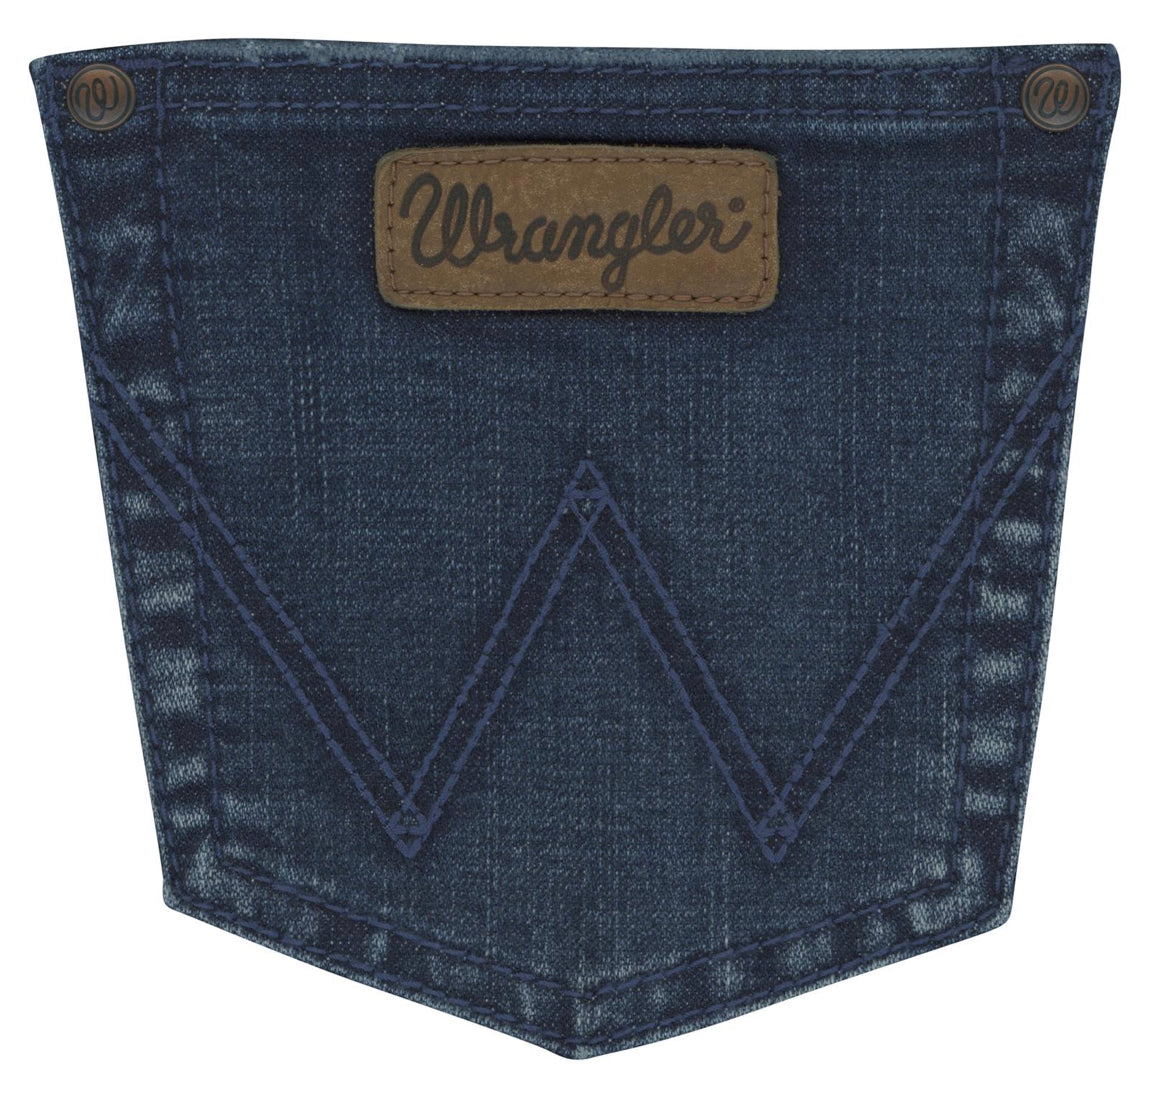 Wrangler® Retro® Trouser Jean - Mid Rise - Sophia (09mwwsa)